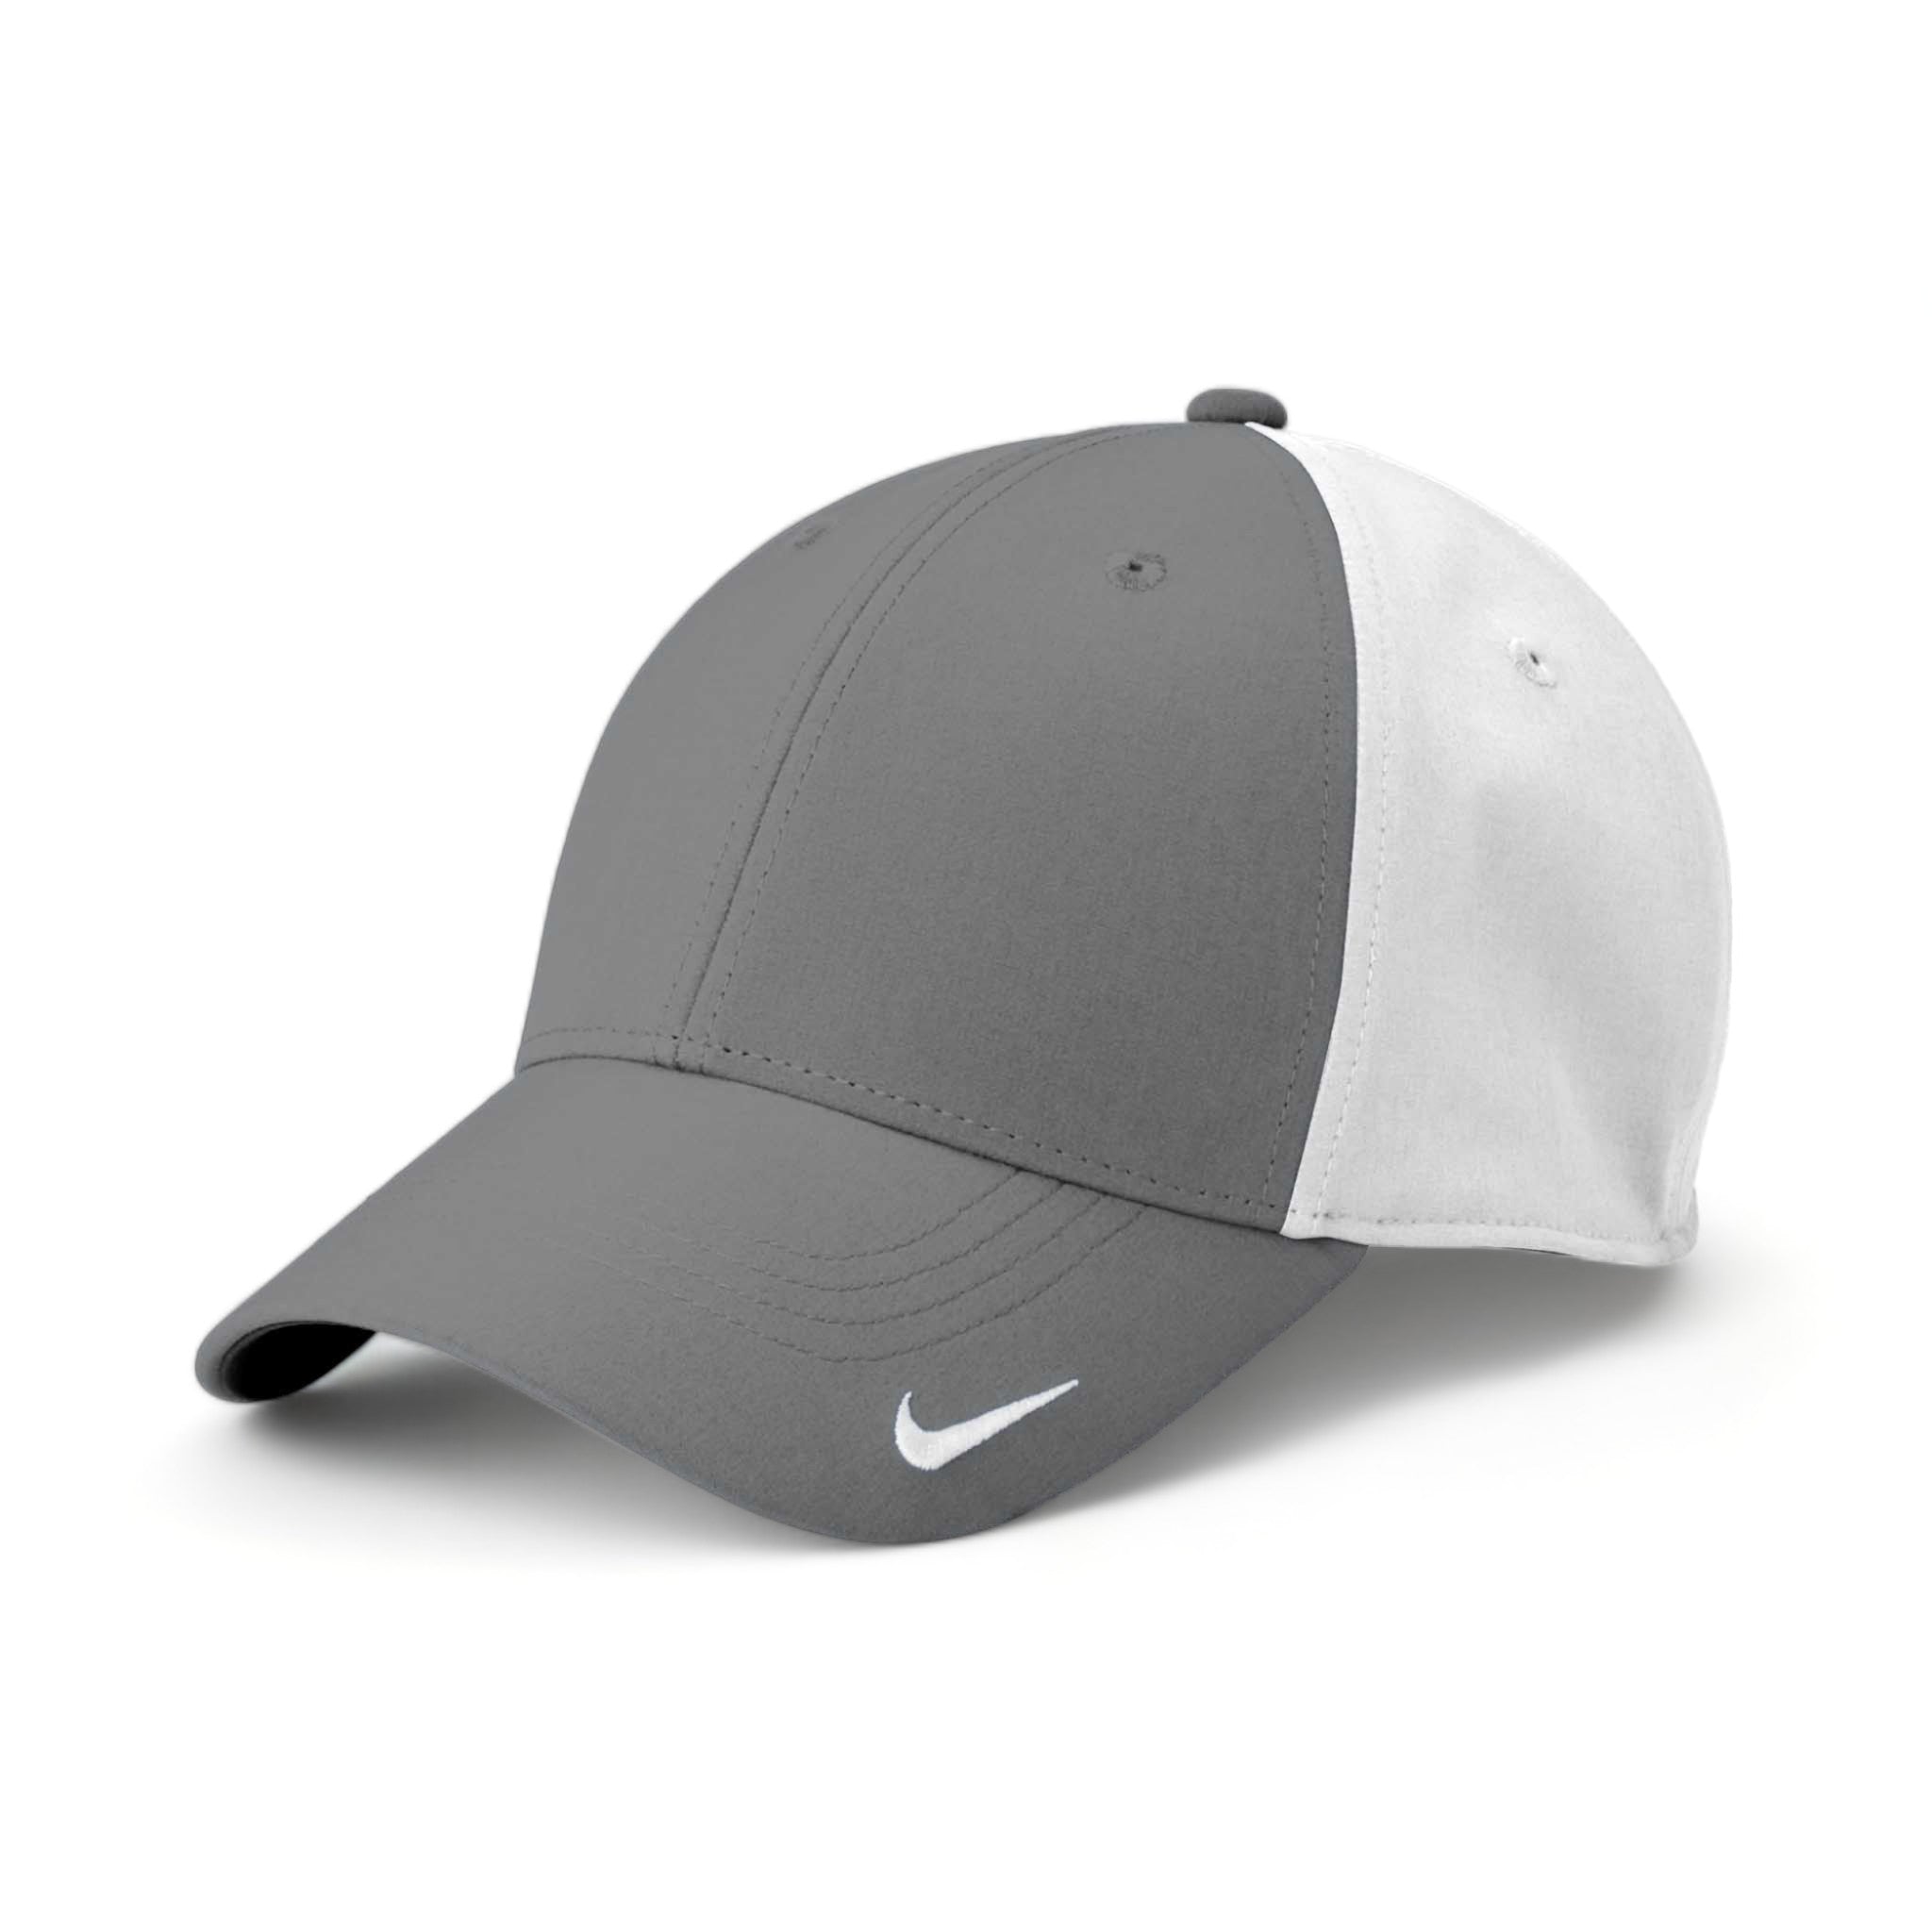 Side view of Nike NKFB6447 custom hat in dark grey and white